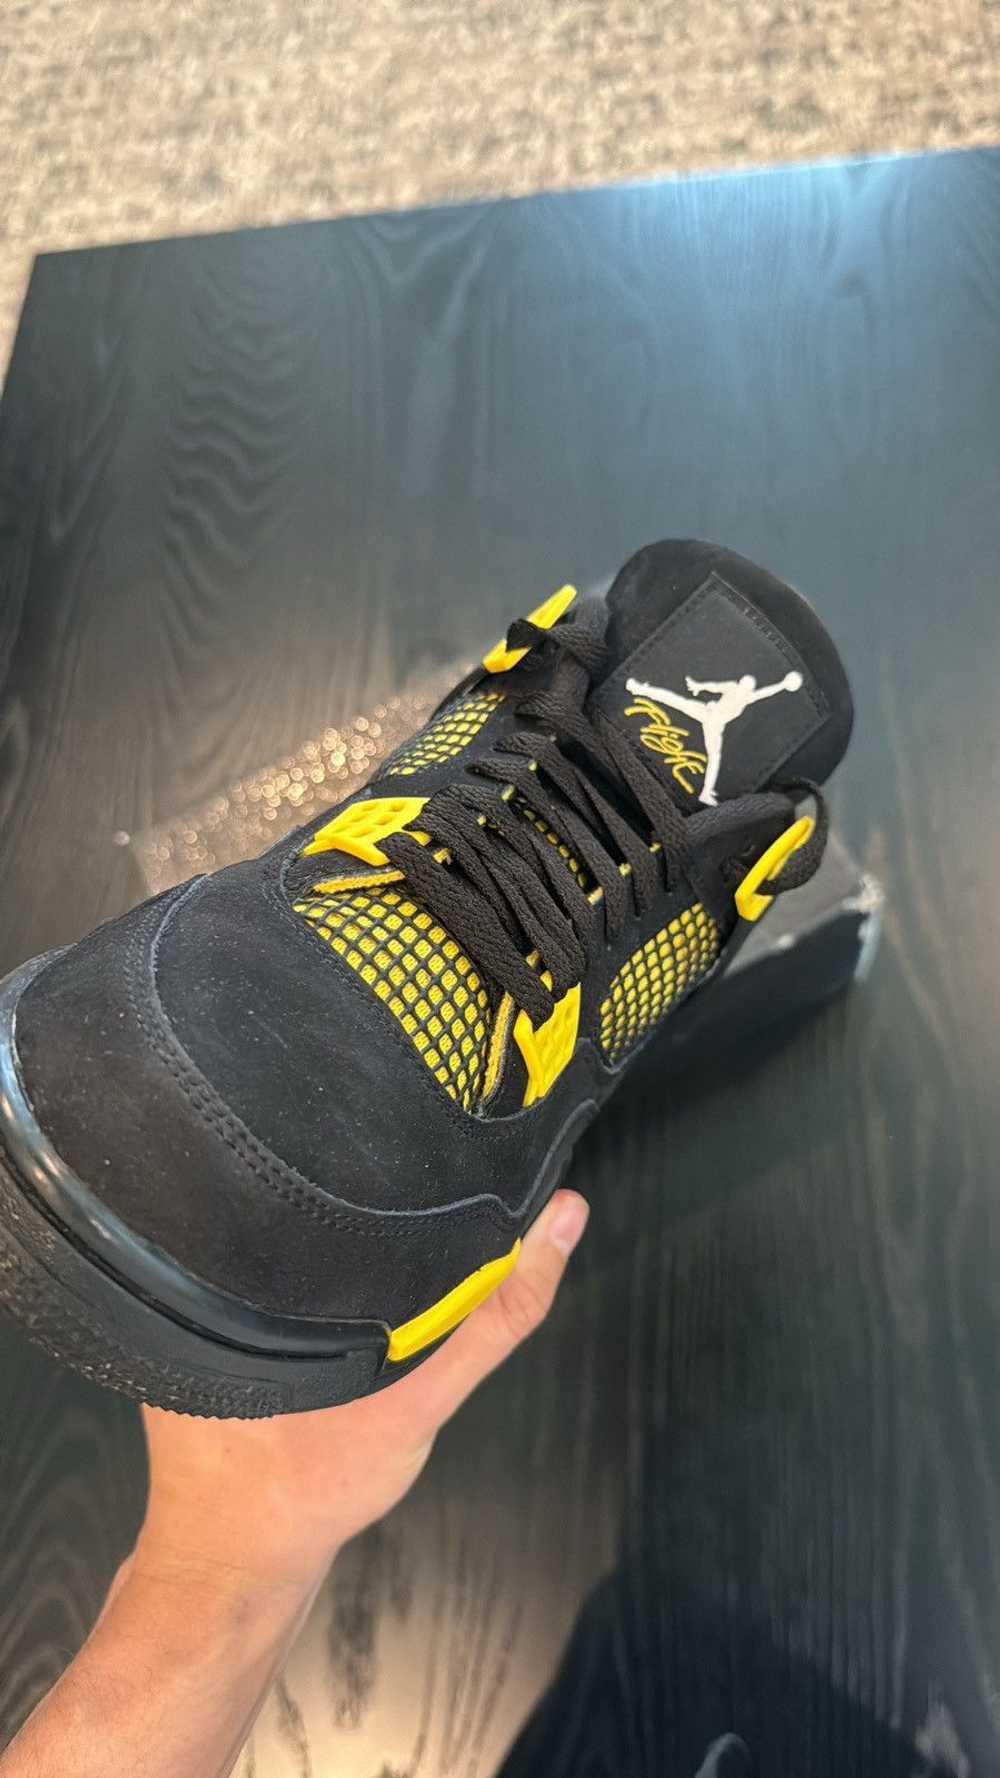 Jordan Brand × Nike Nike Jordan Retro 4 “Thunder” - image 3